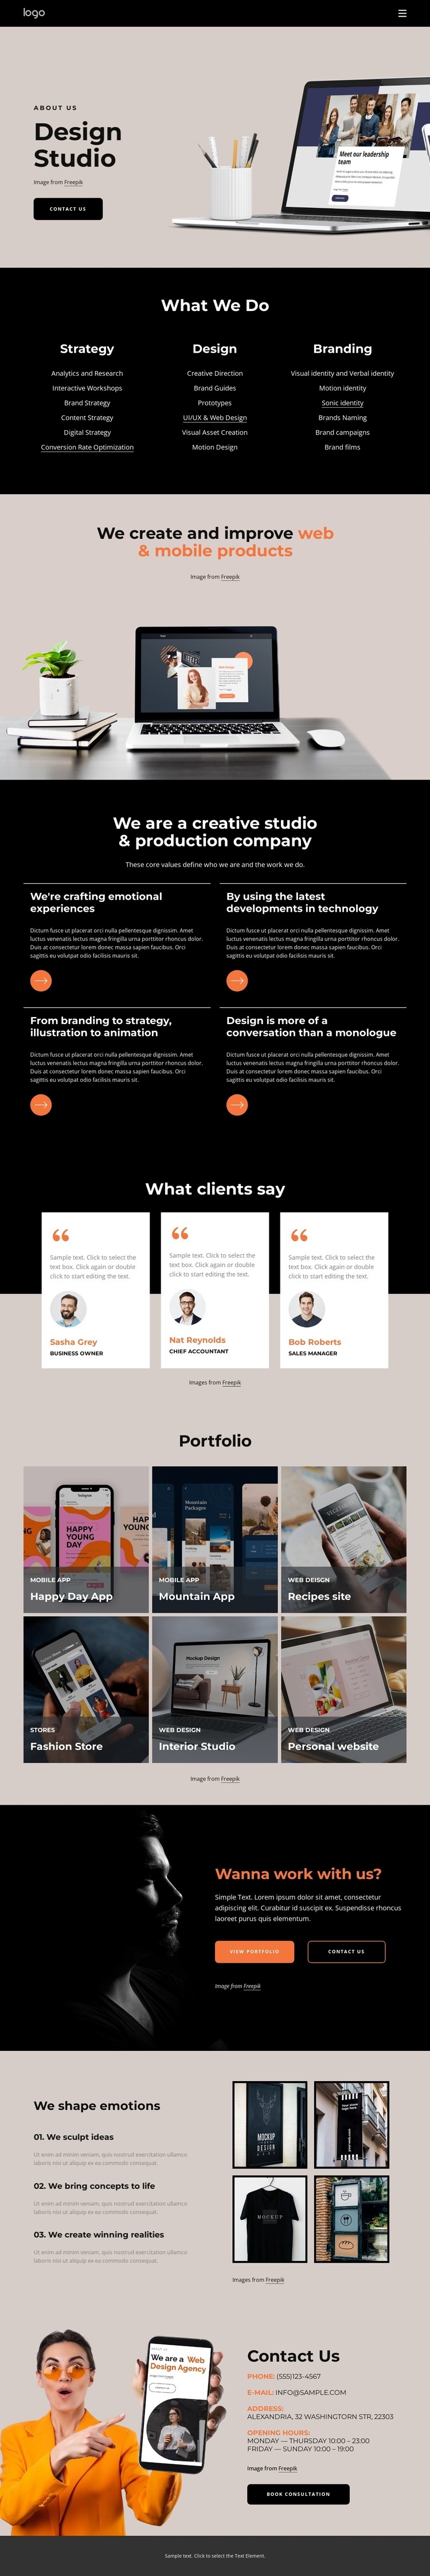 We are a creative company Homepage Design